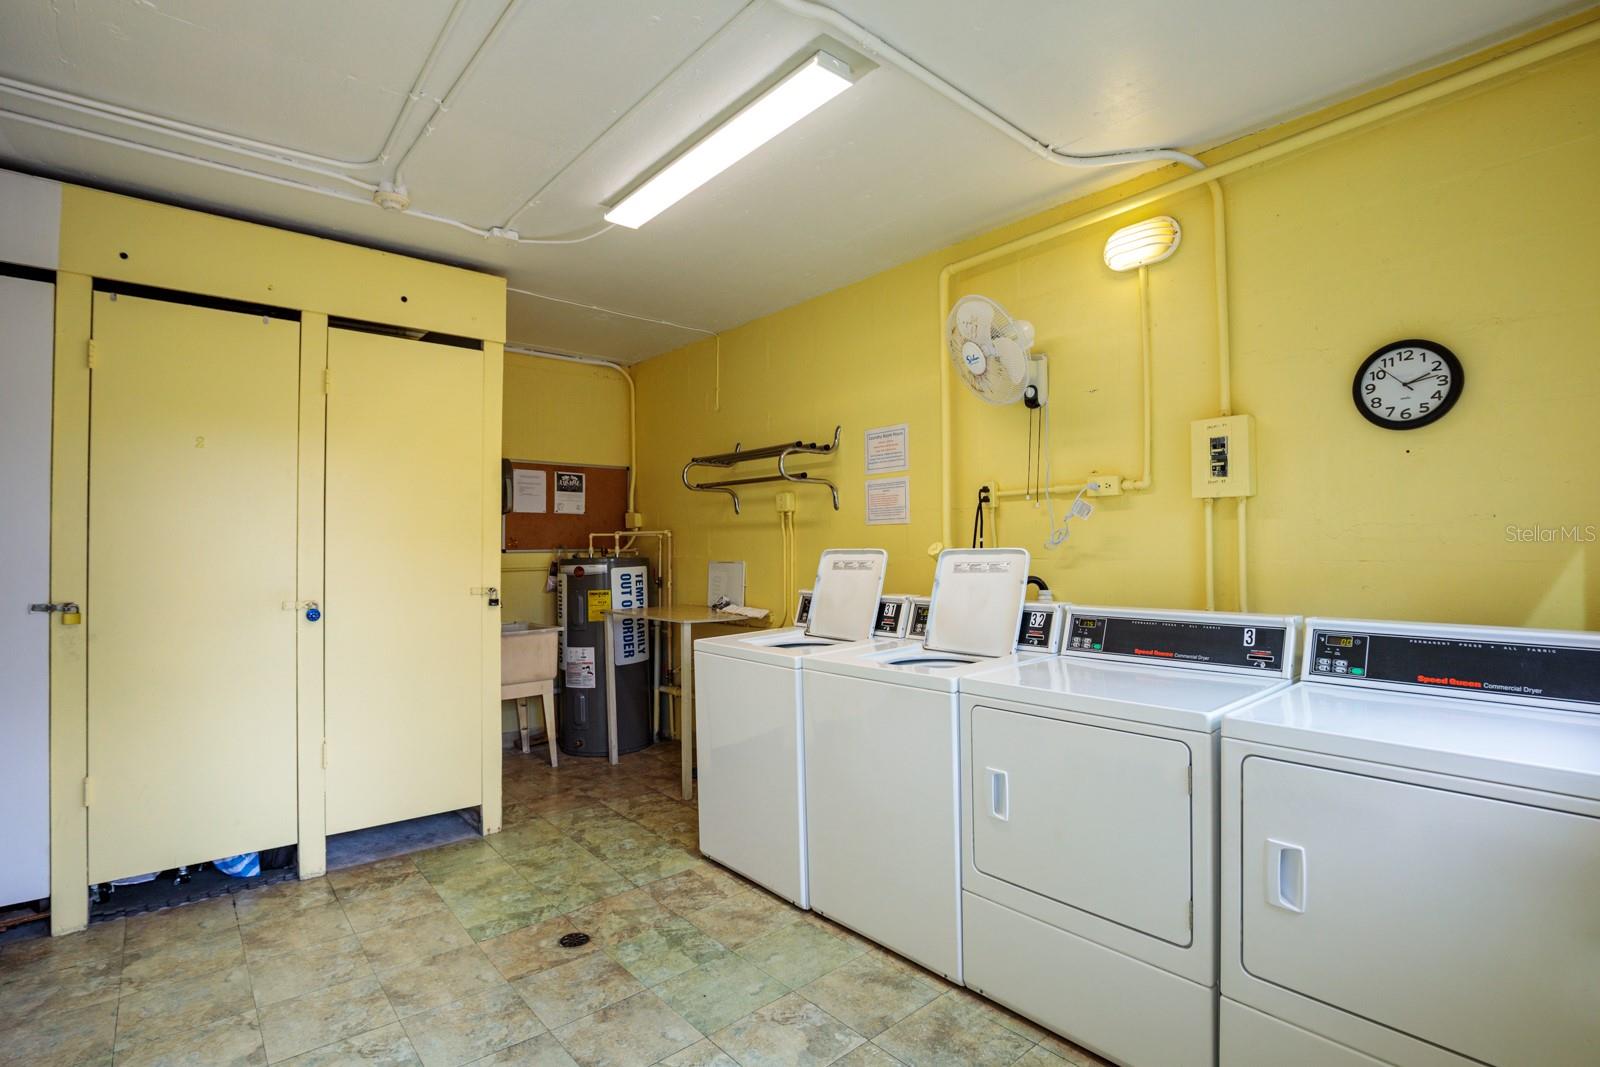 Bldg community Laundry room & unit Storage lockers. Every building has a laundry room.